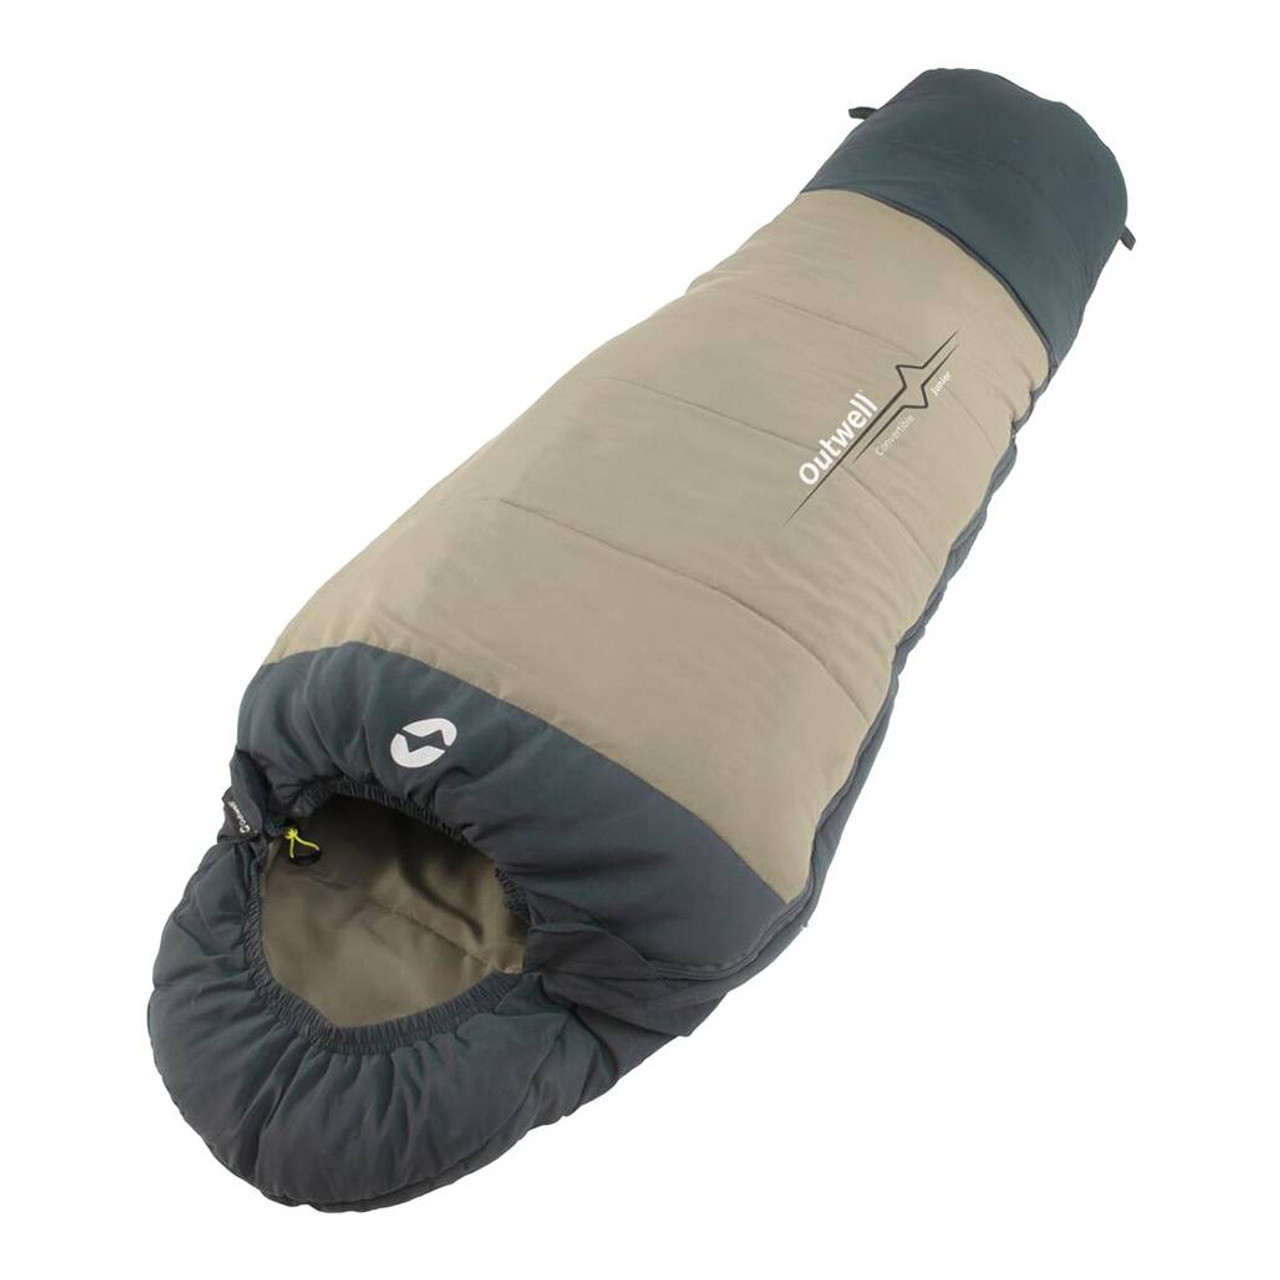 Outwell Convertible Junior Sleeping Bag